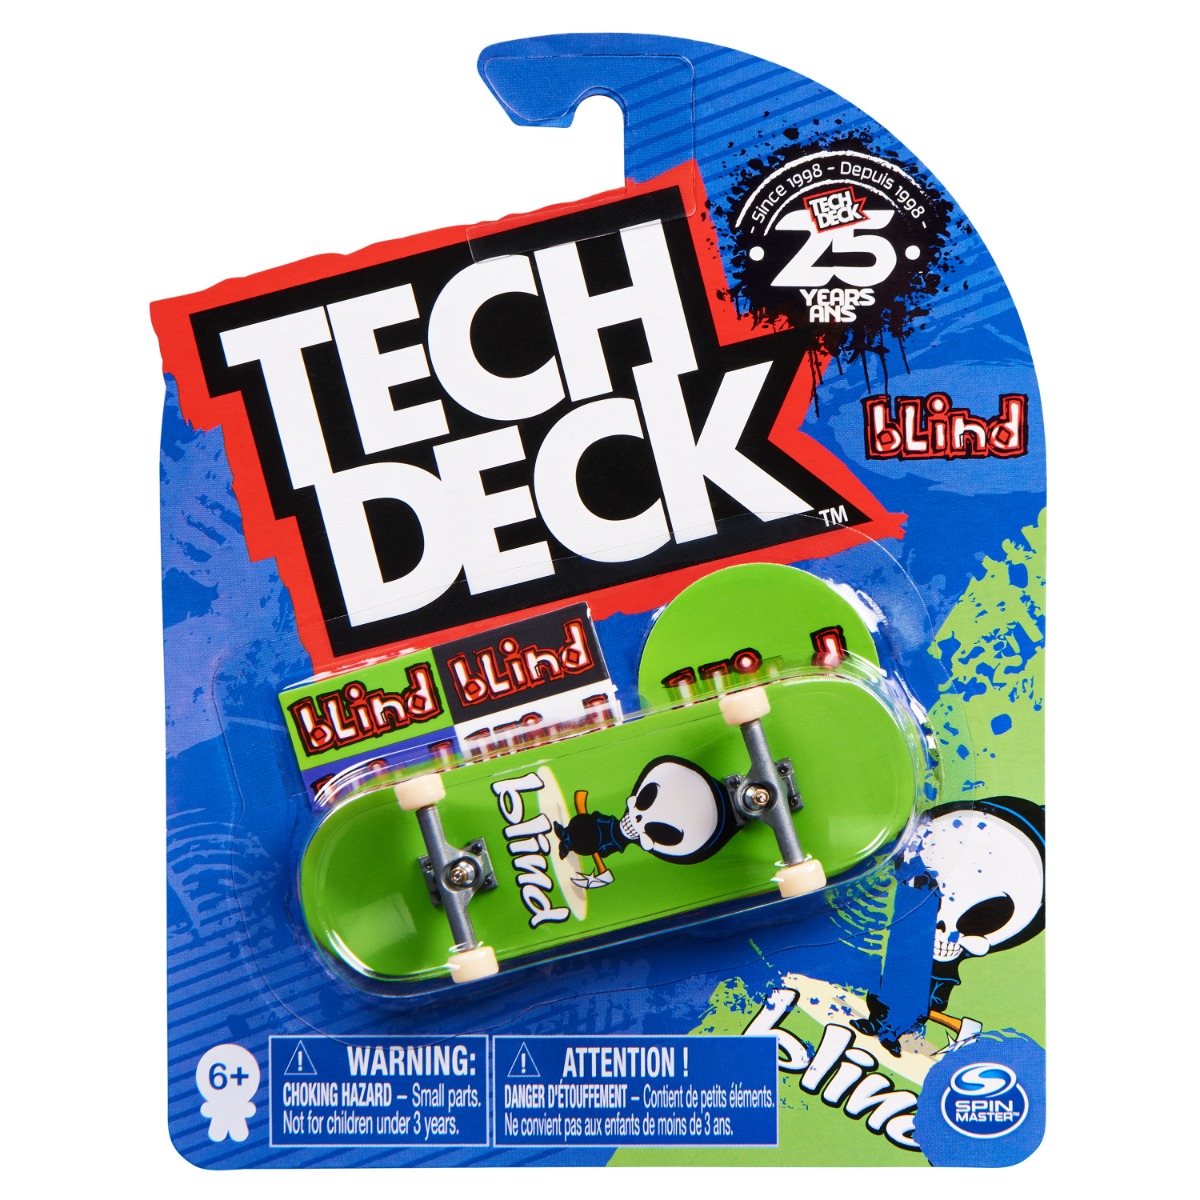 Mini placa skateboard Tech Deck, Blind, 20141229